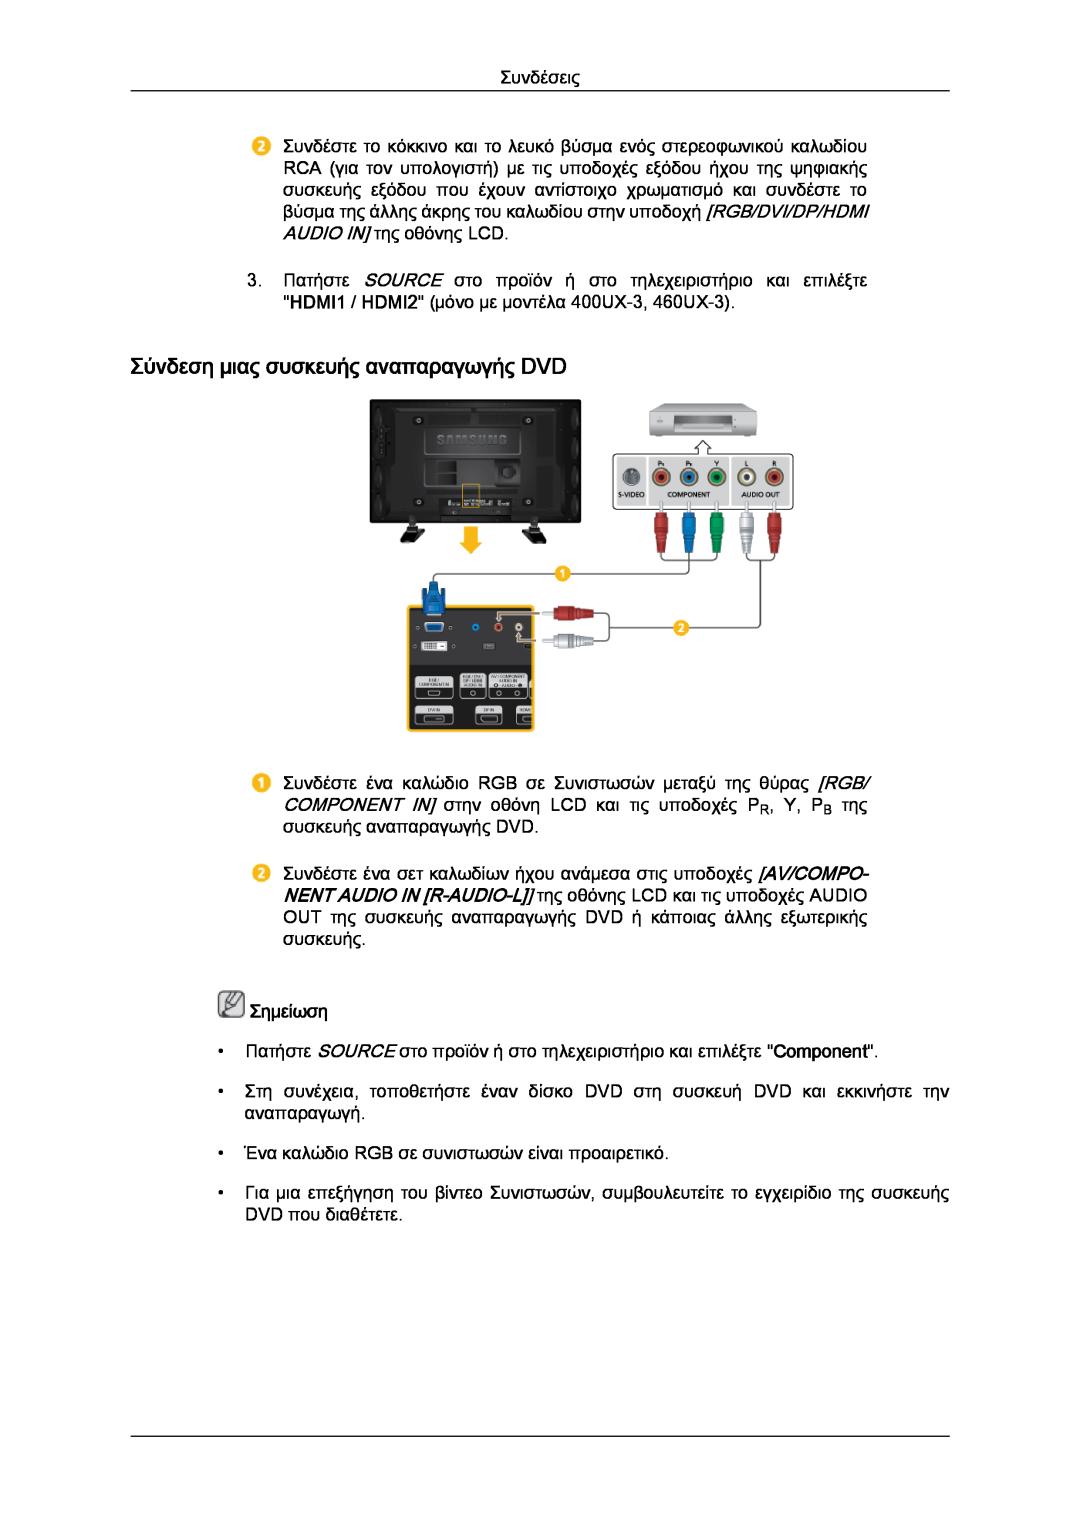 Samsung LH40GWPLBC/EN, LH40GWTLBC/EN, LH40GWSLBC/EN, LH46GWPLBC/EN manual Σύνδεση μιας συσκευής αναπαραγωγής DVD, Σημείωση 